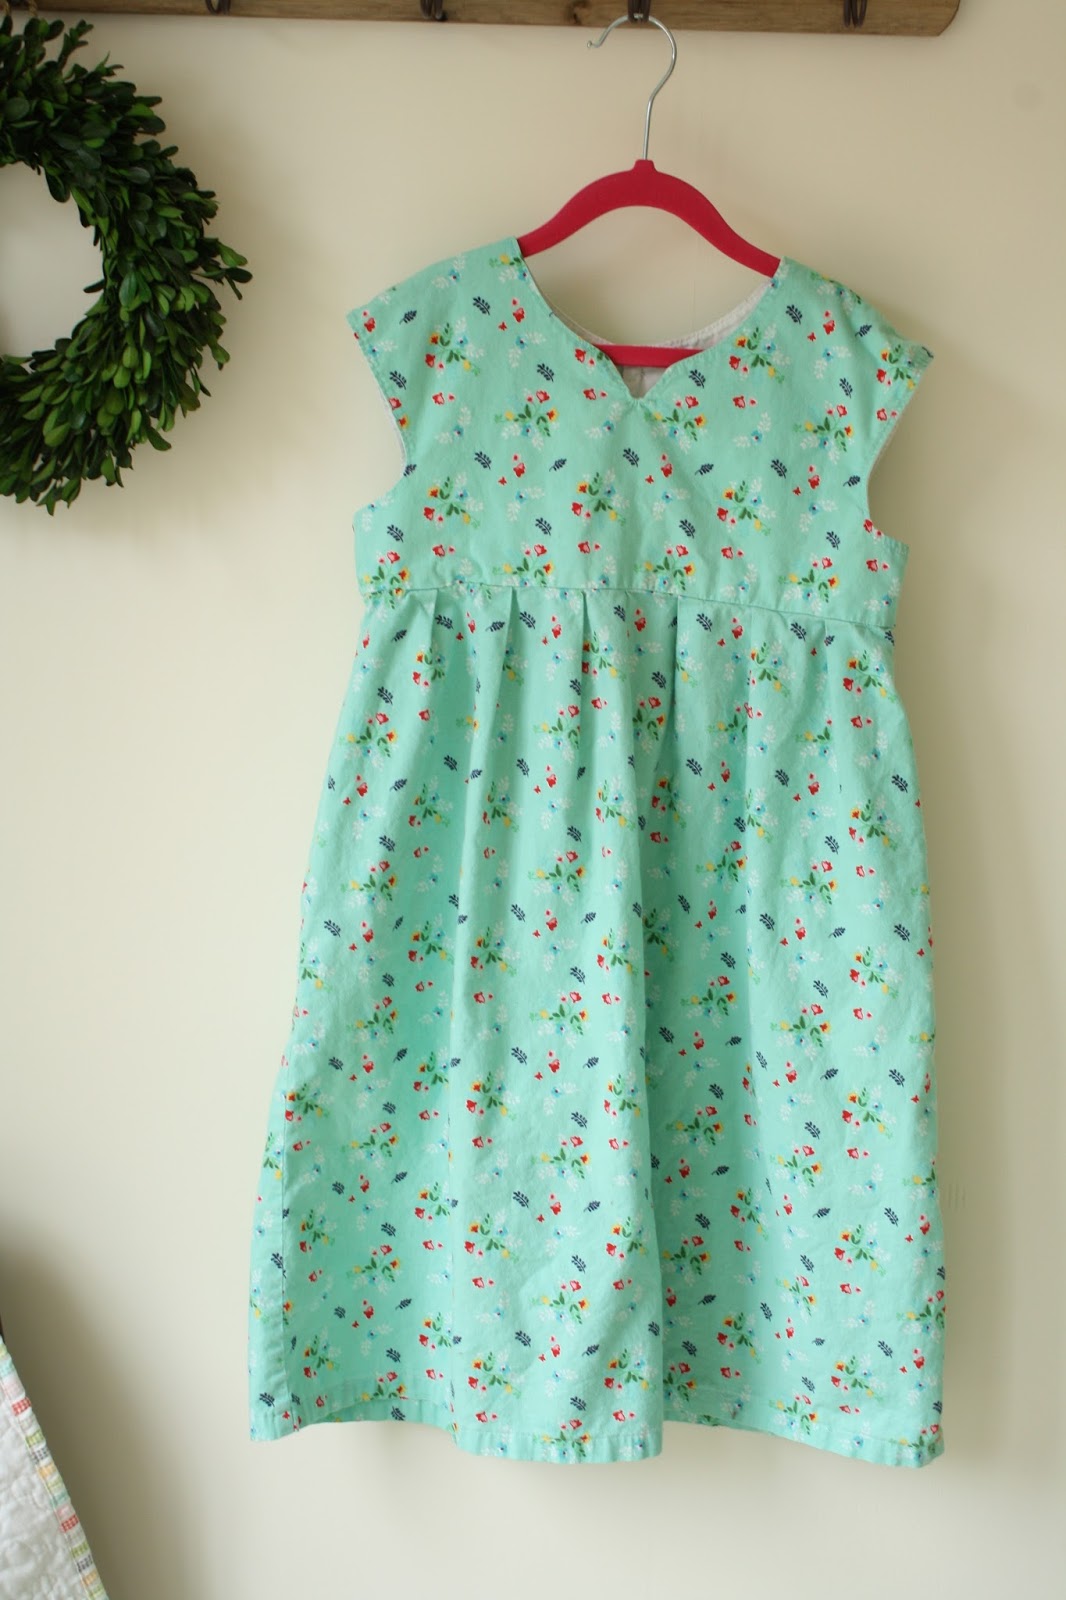 Geranium Dresses | Why Not Sew? Quilts | Bloglovin’